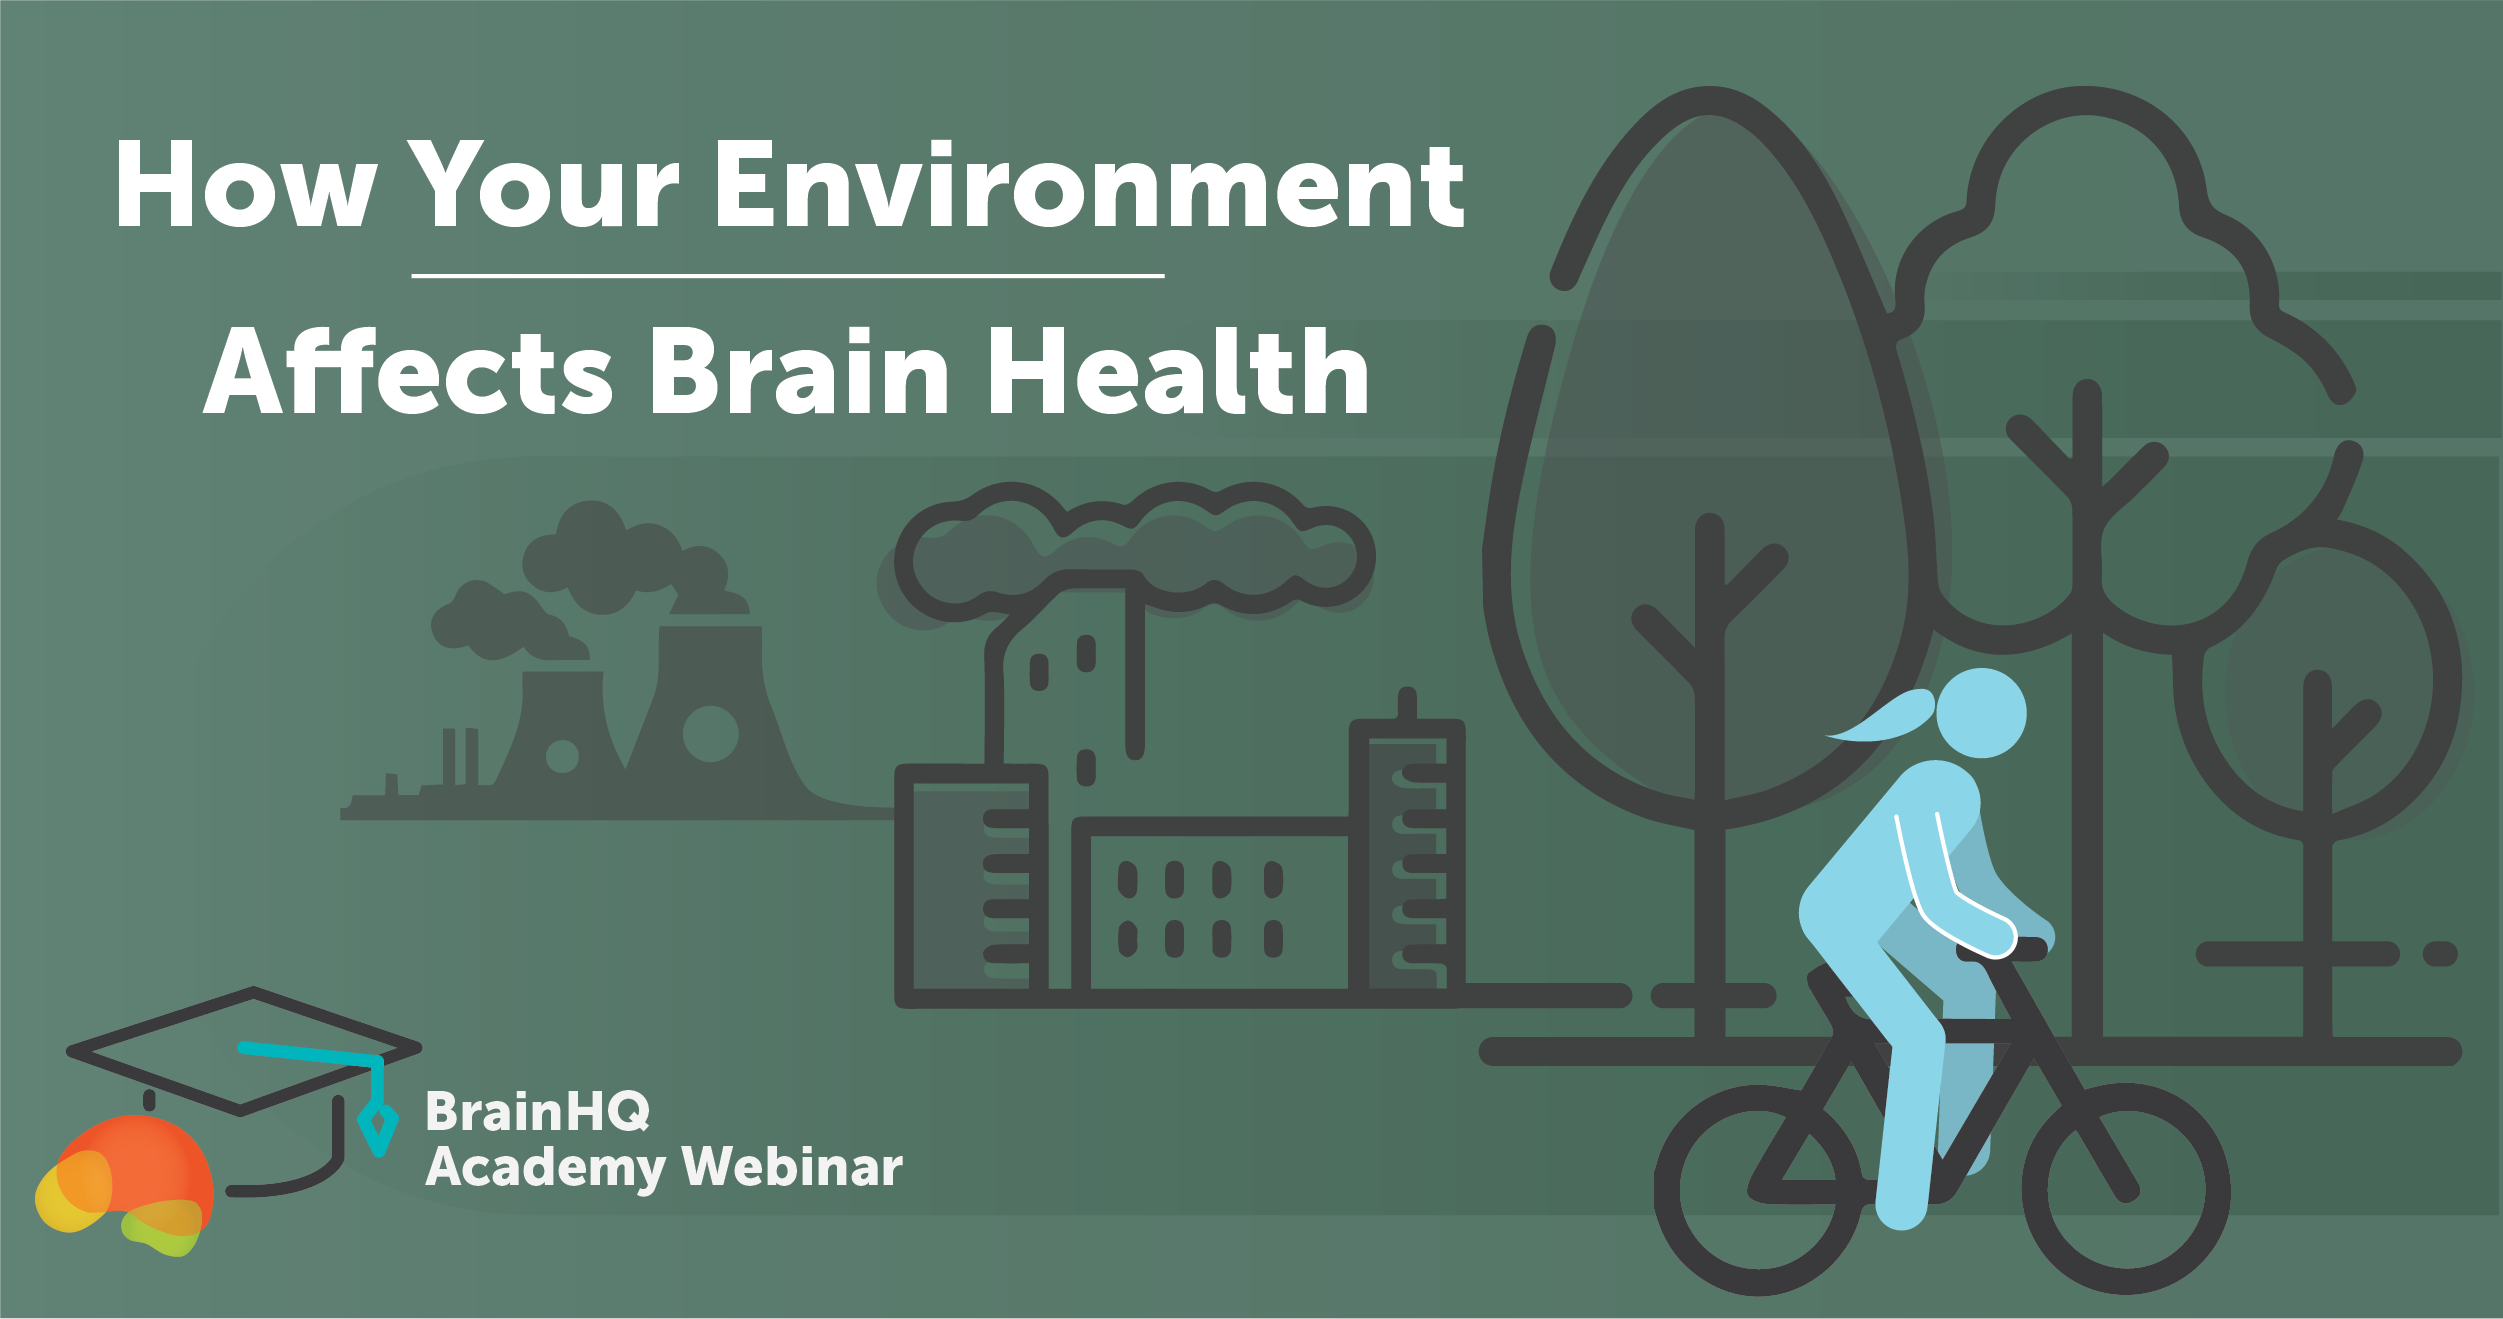 BrainHQ Academy: How Your Environment Affects Brain Health